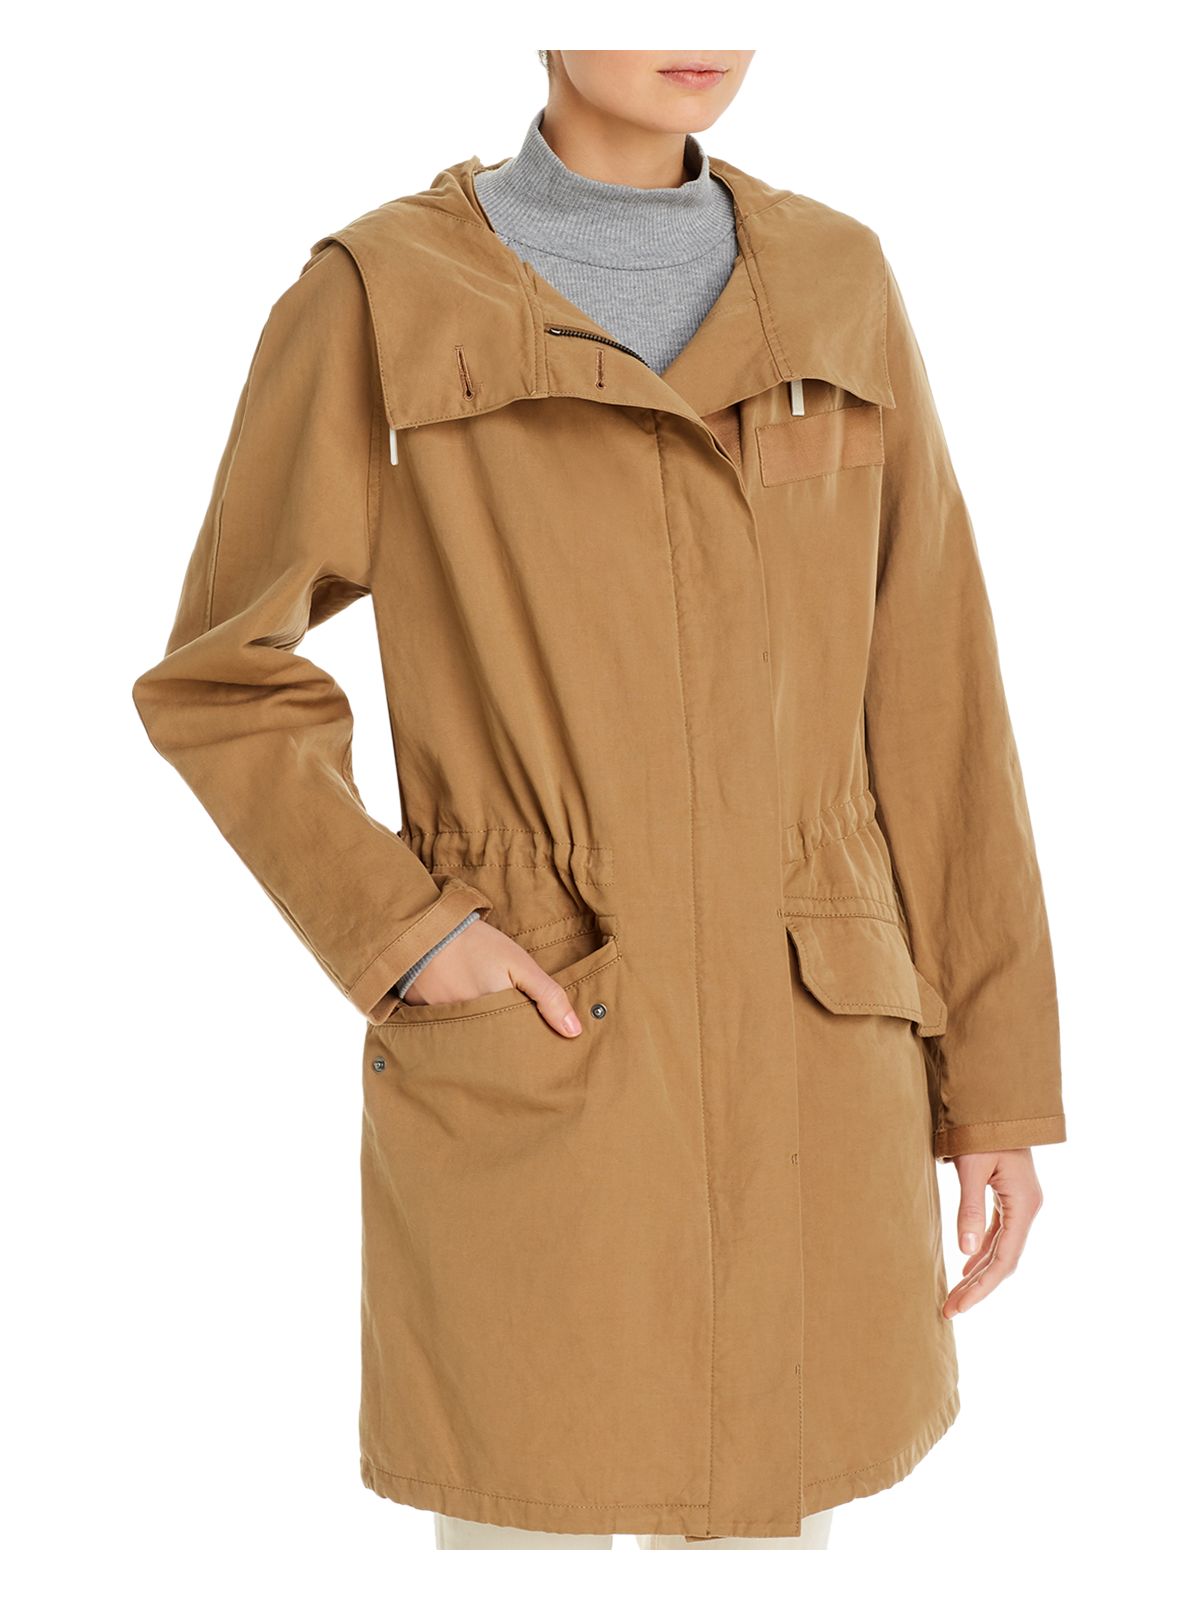 YS ARMY Womens Beige Zip Up Winter Jacket Coat 42